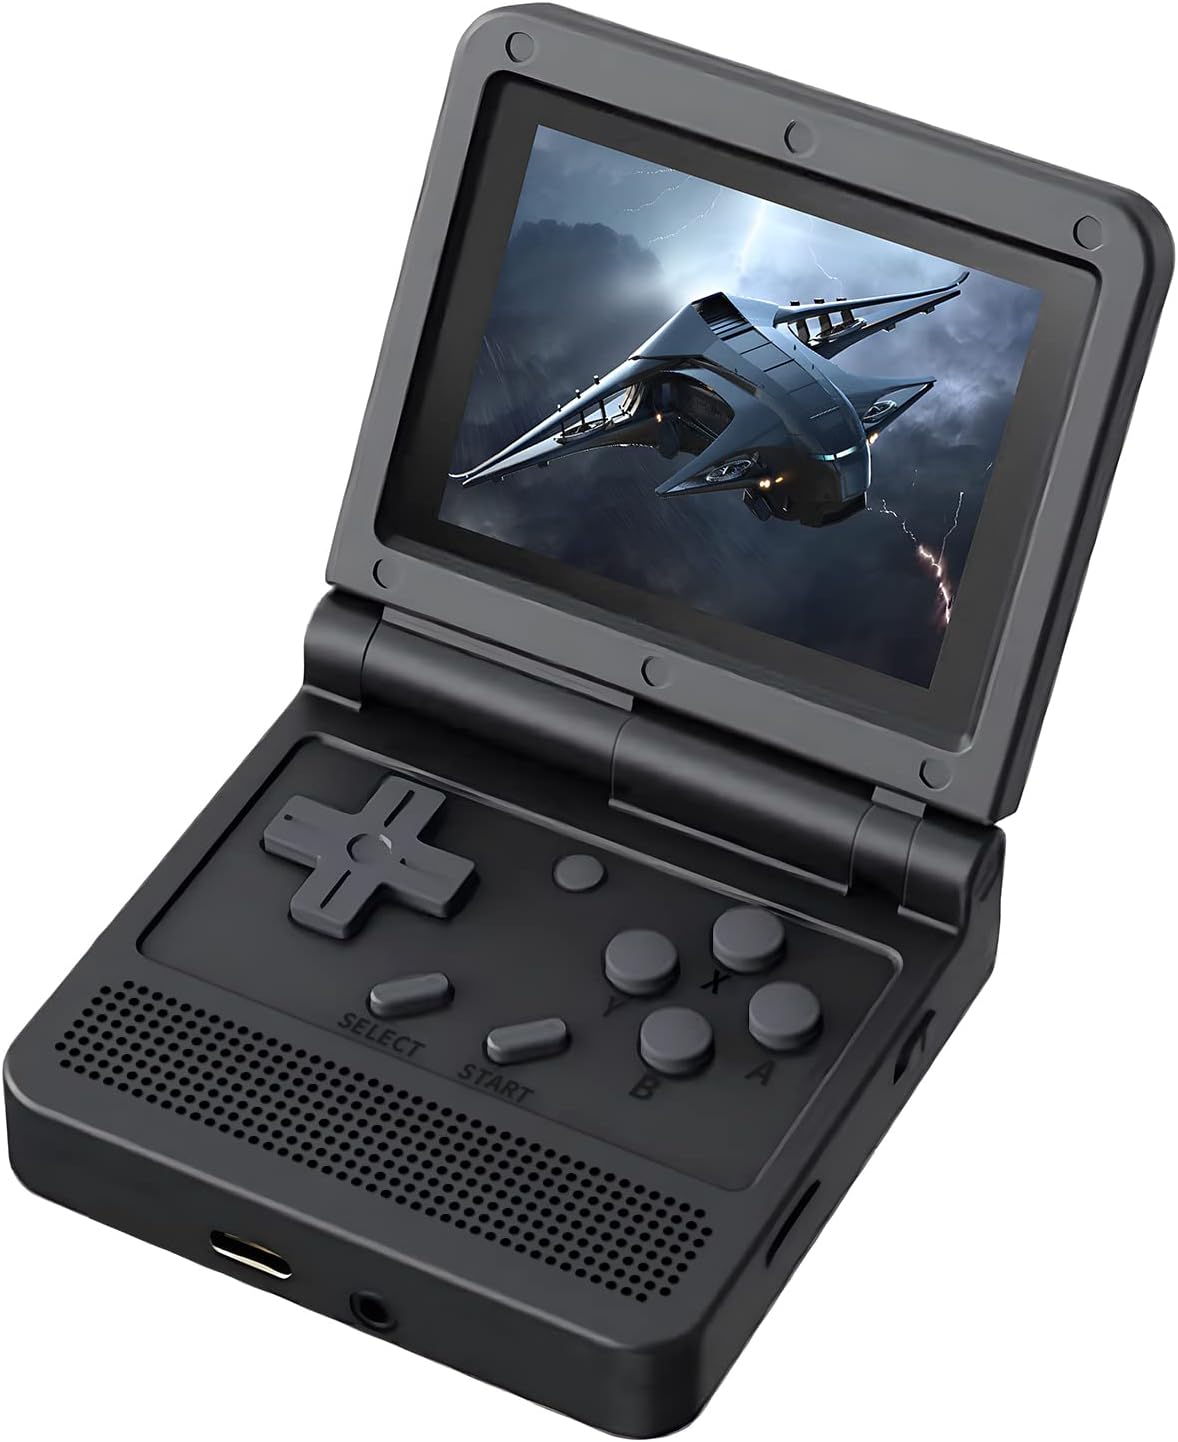 V90 Mini Portable Game Console Review